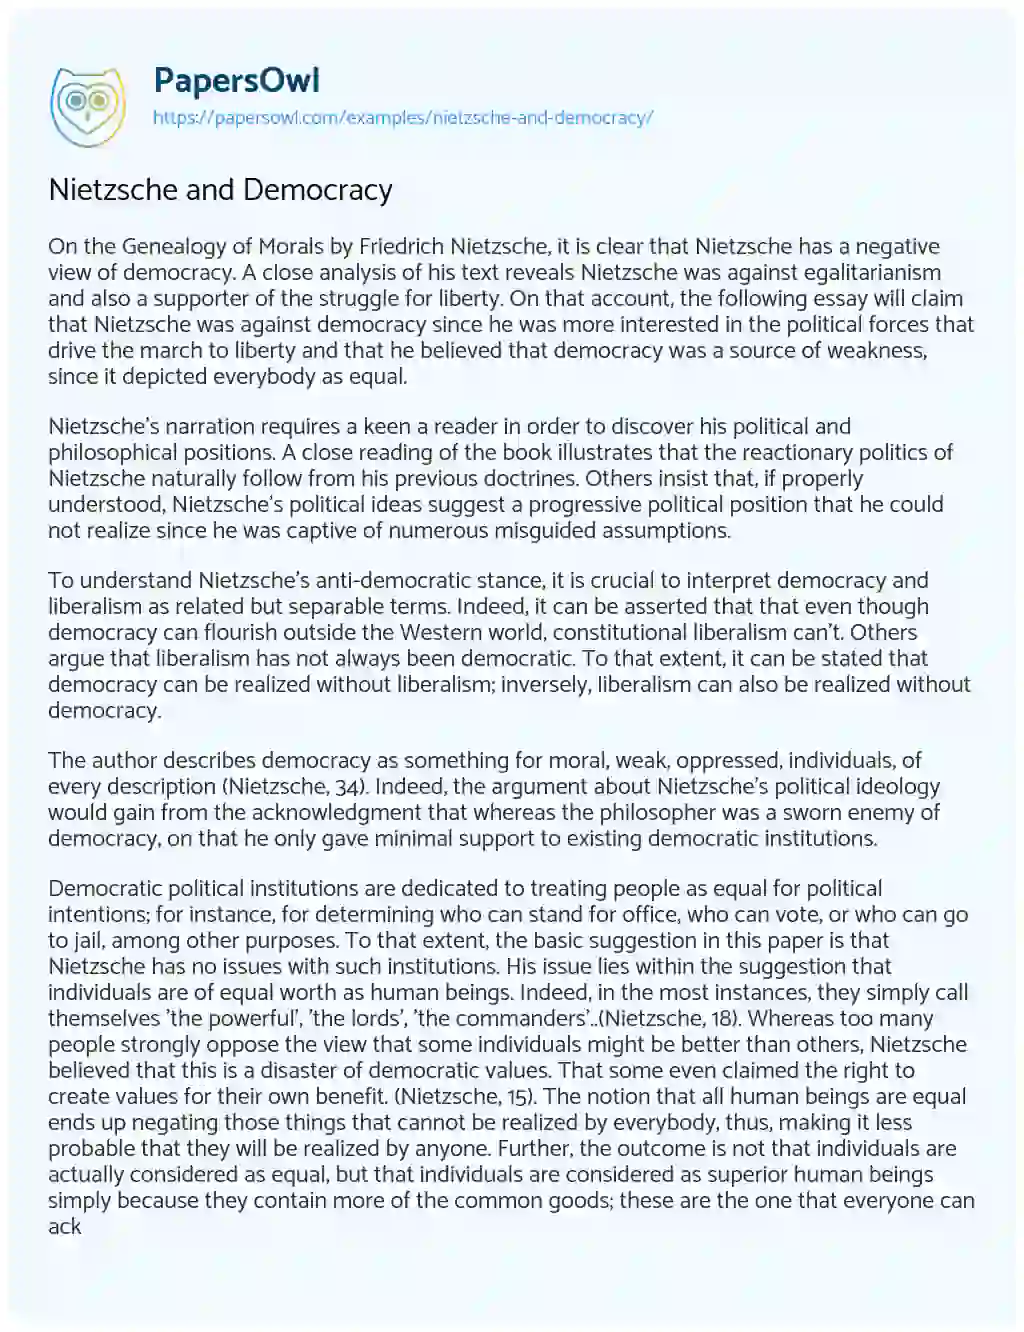 Essay on Nietzsche and Democracy